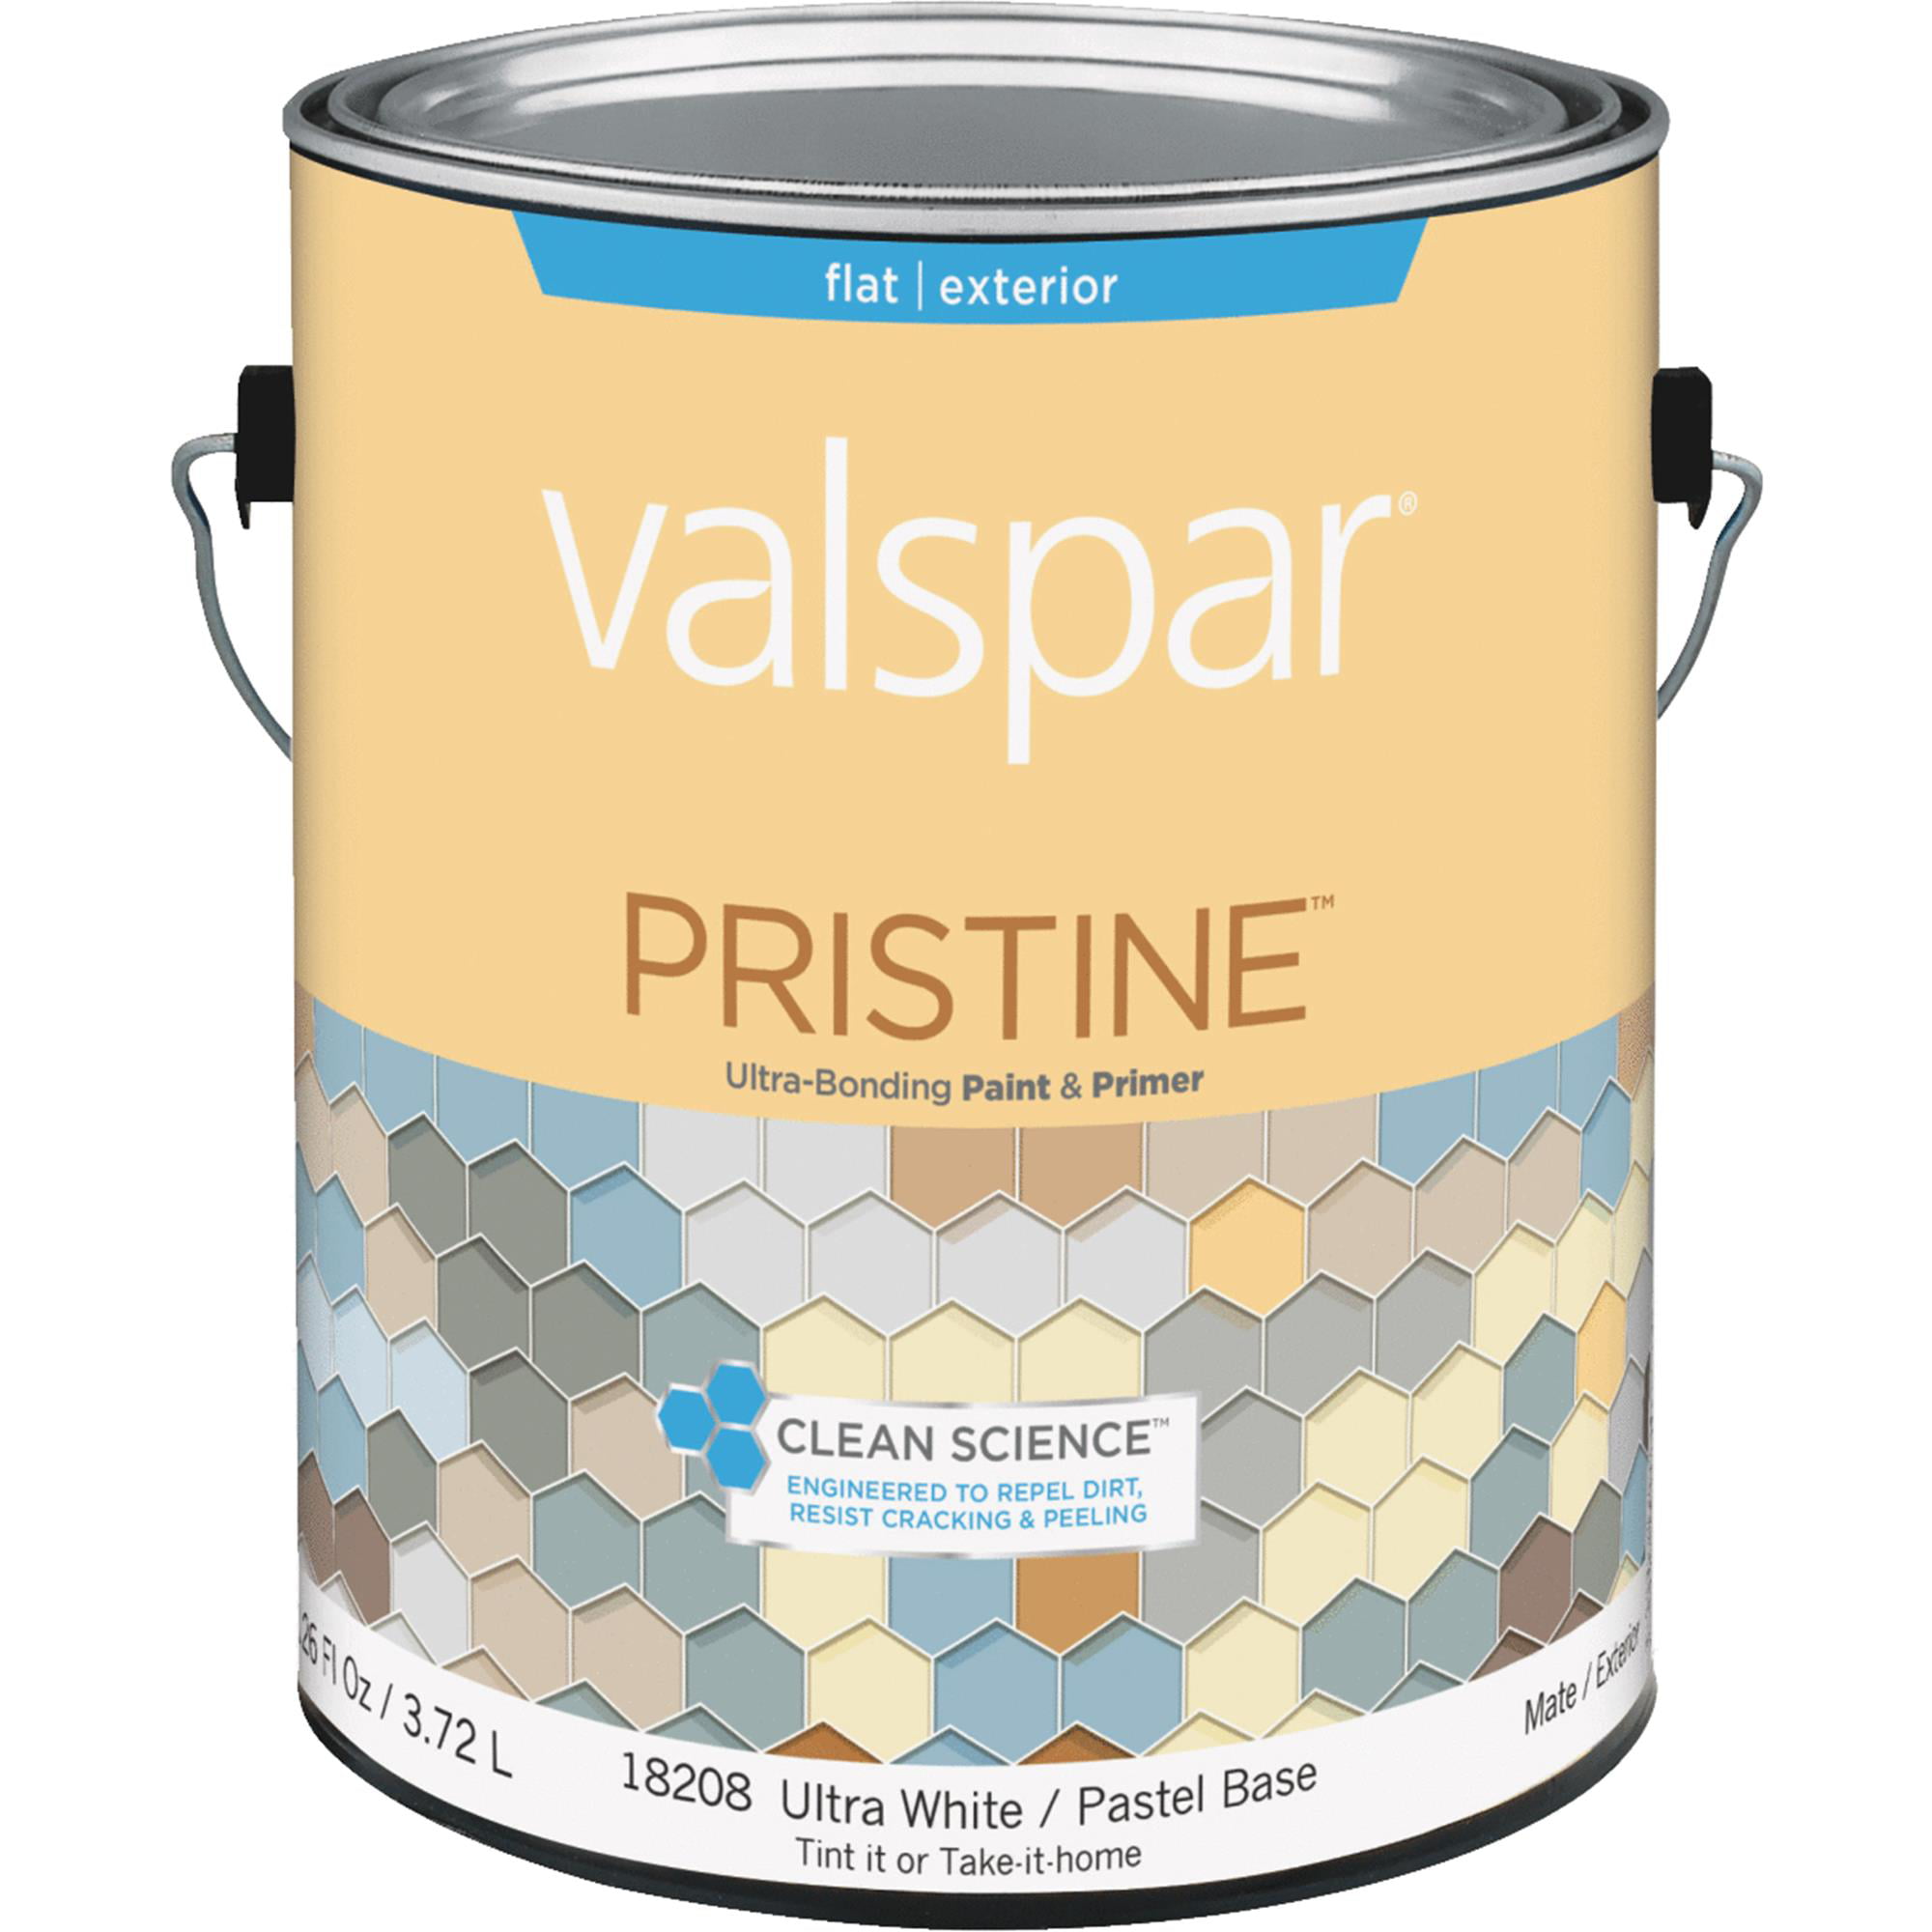 Valspar Pristine White Enamel Paint Exterior and Interior 1 gal